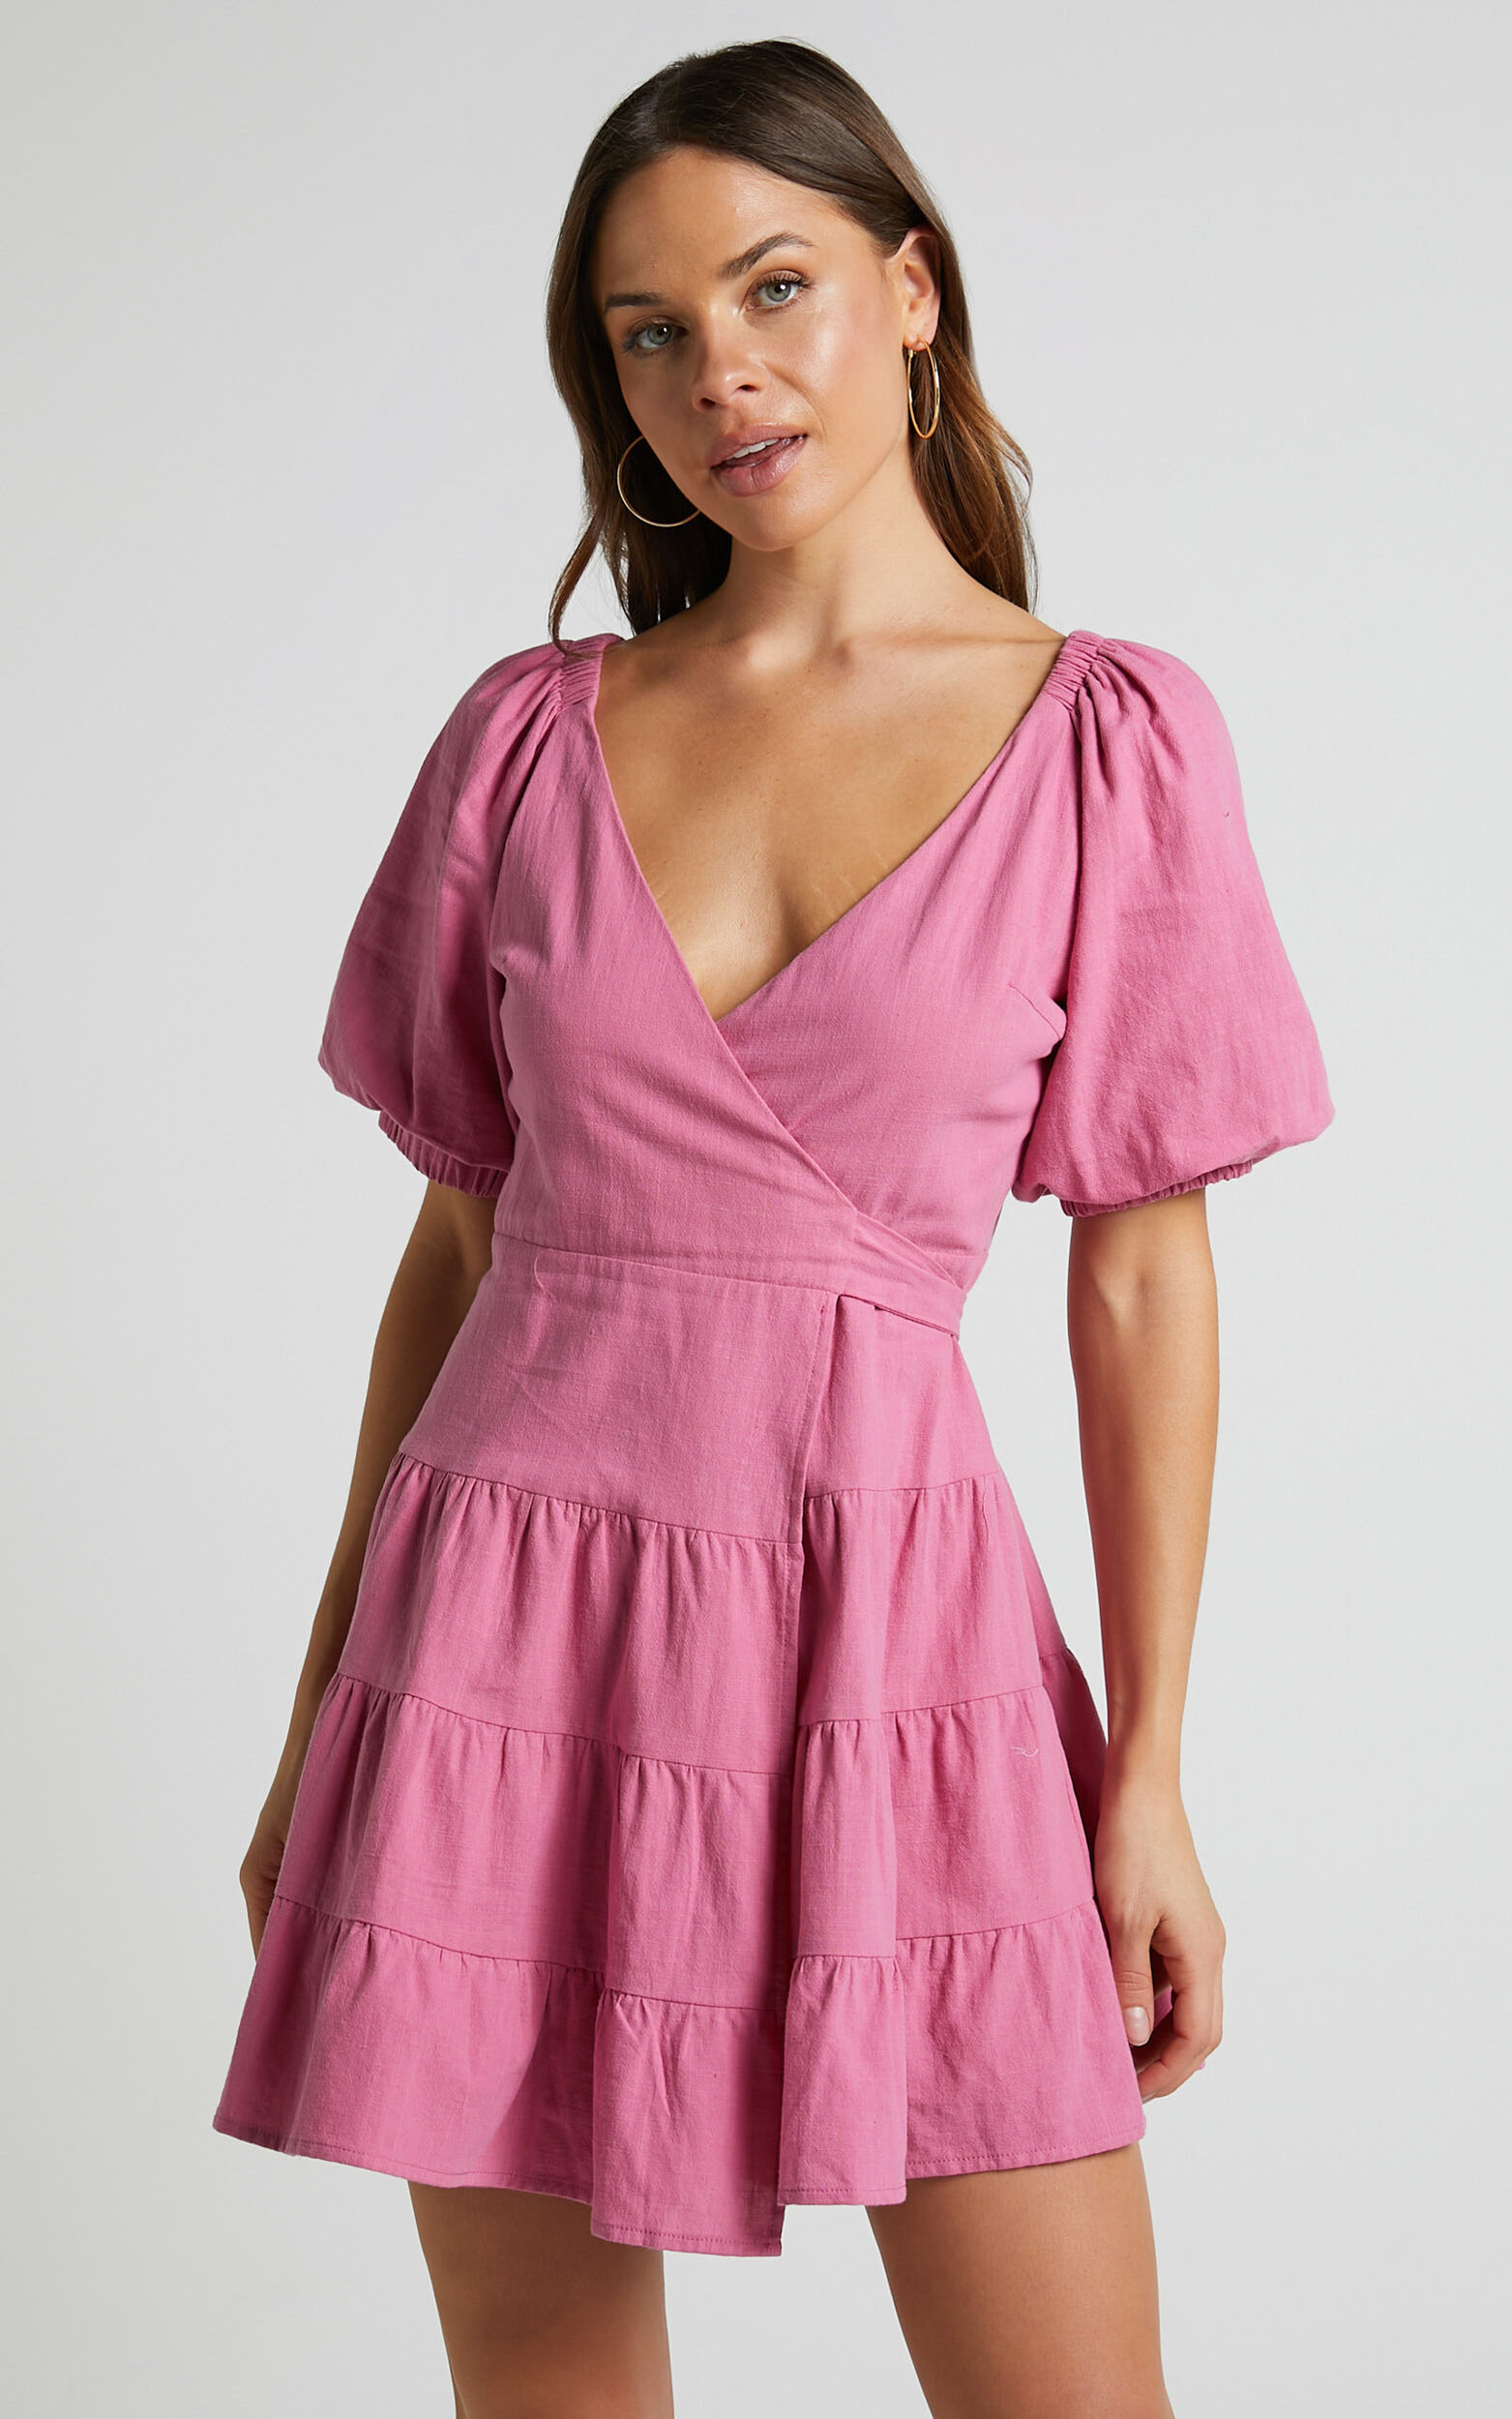 Janiellay Mini Dress - Short Puff Sleeve Wrap Dress in Pink - 06, PNK1